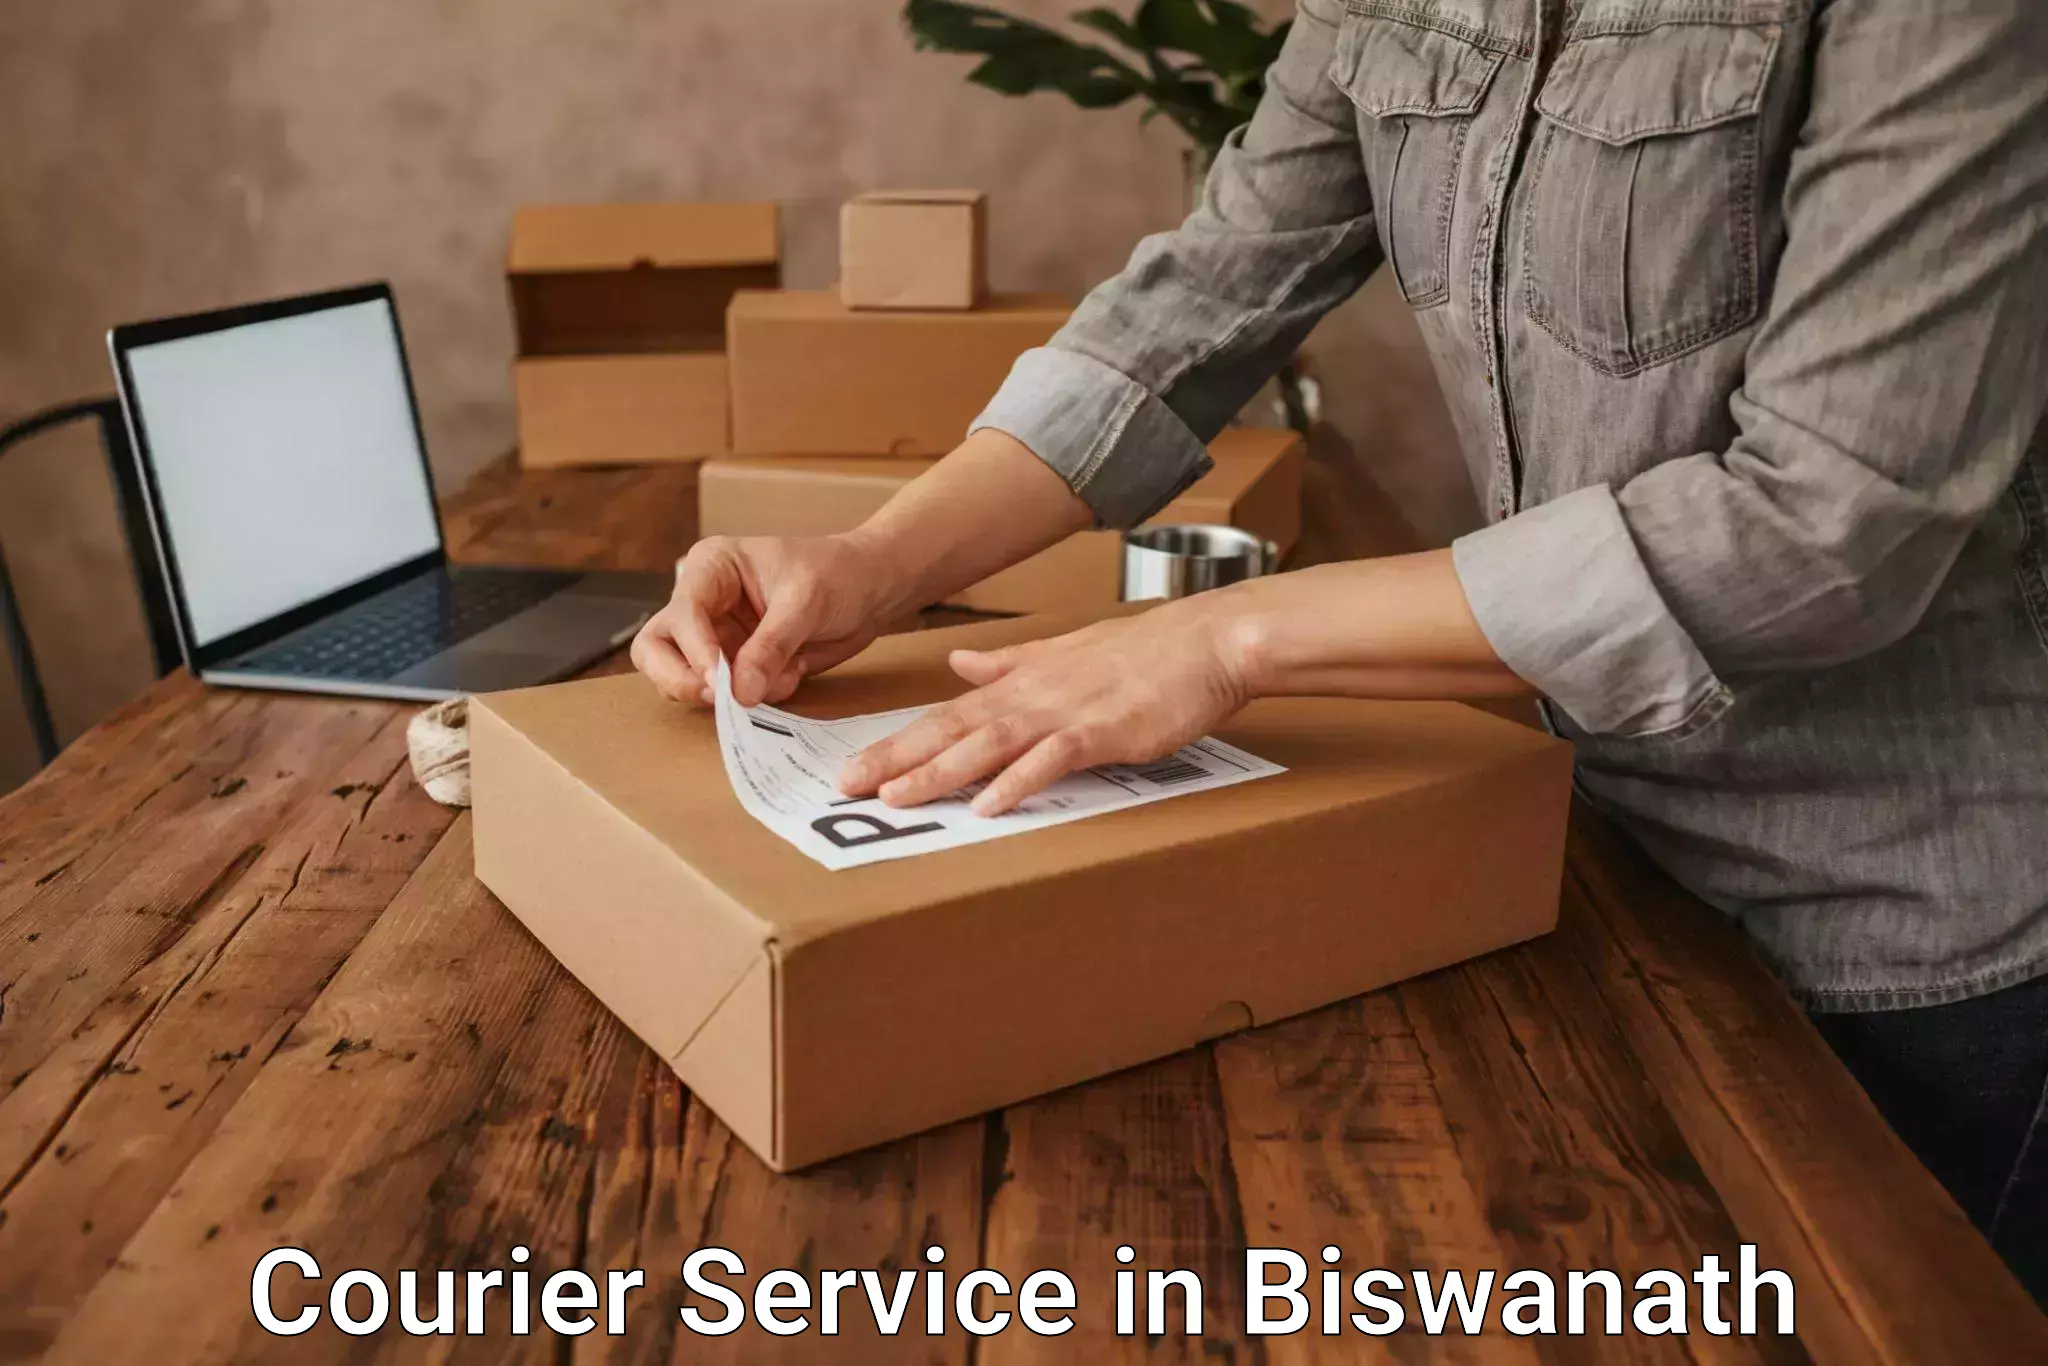 Urgent courier needs in Biswanath